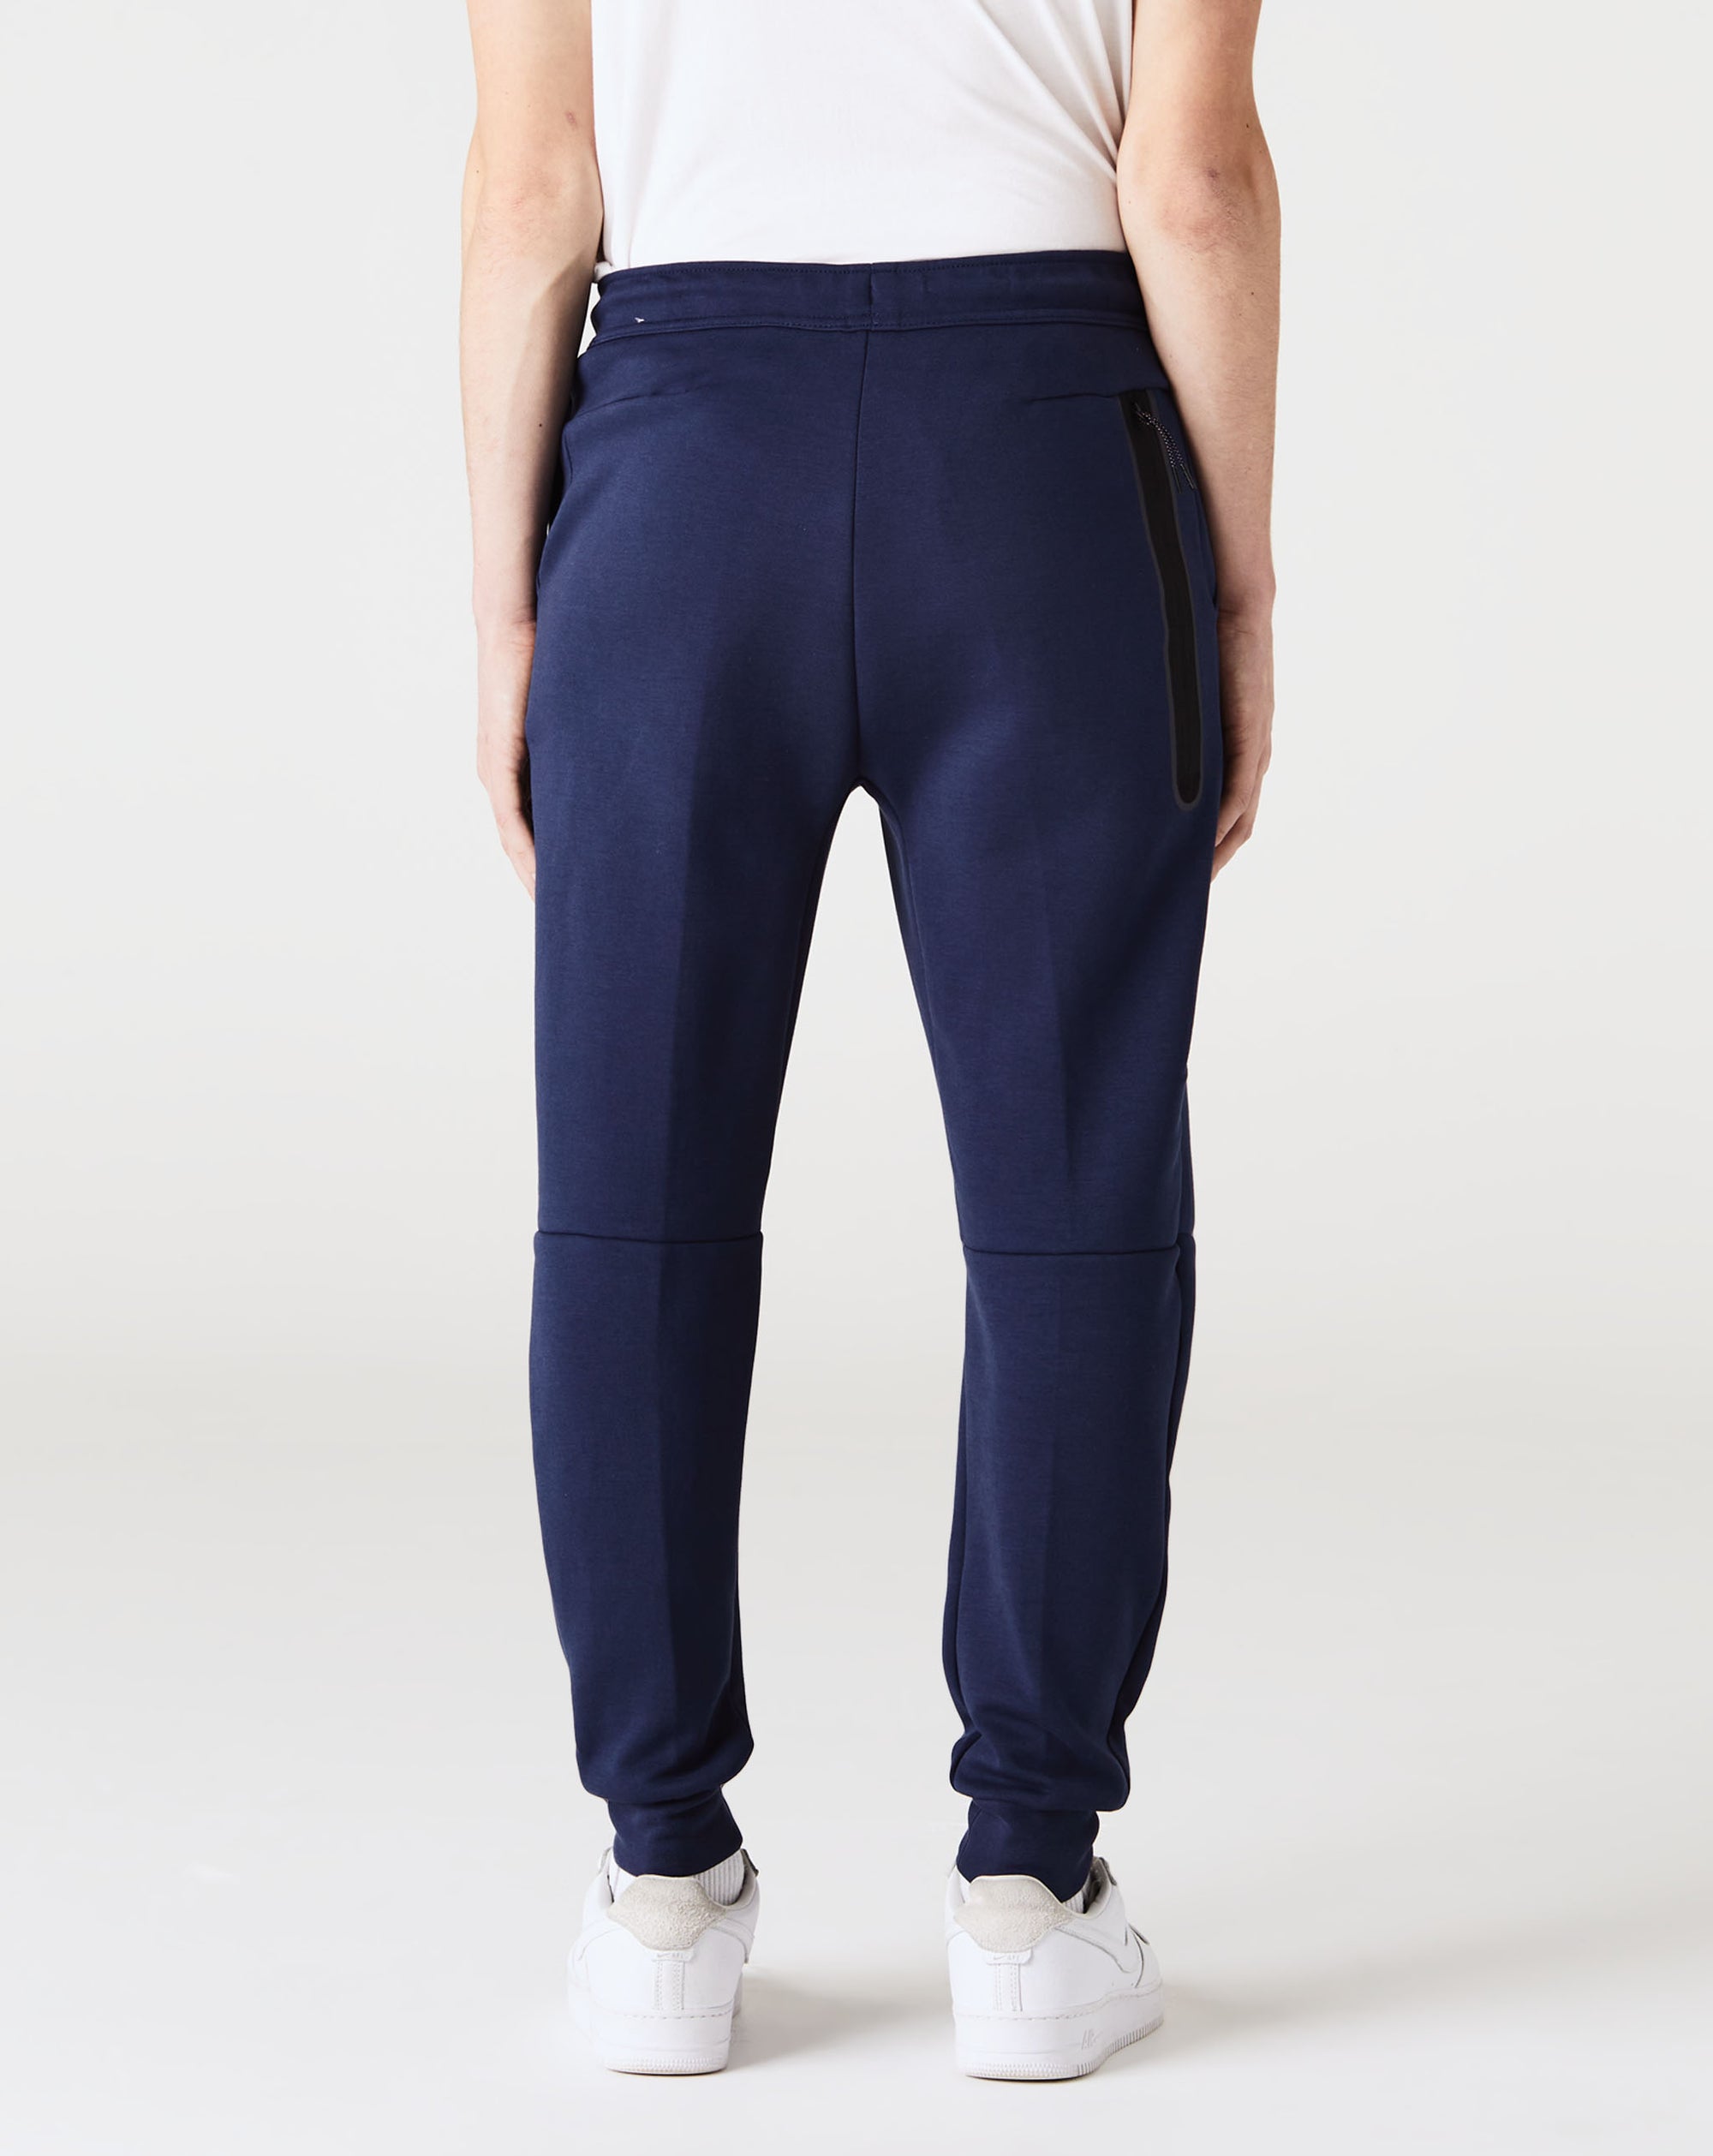 Nike Tech Fleece Joggers Pants Navy Blue Mens 2XL | eBay